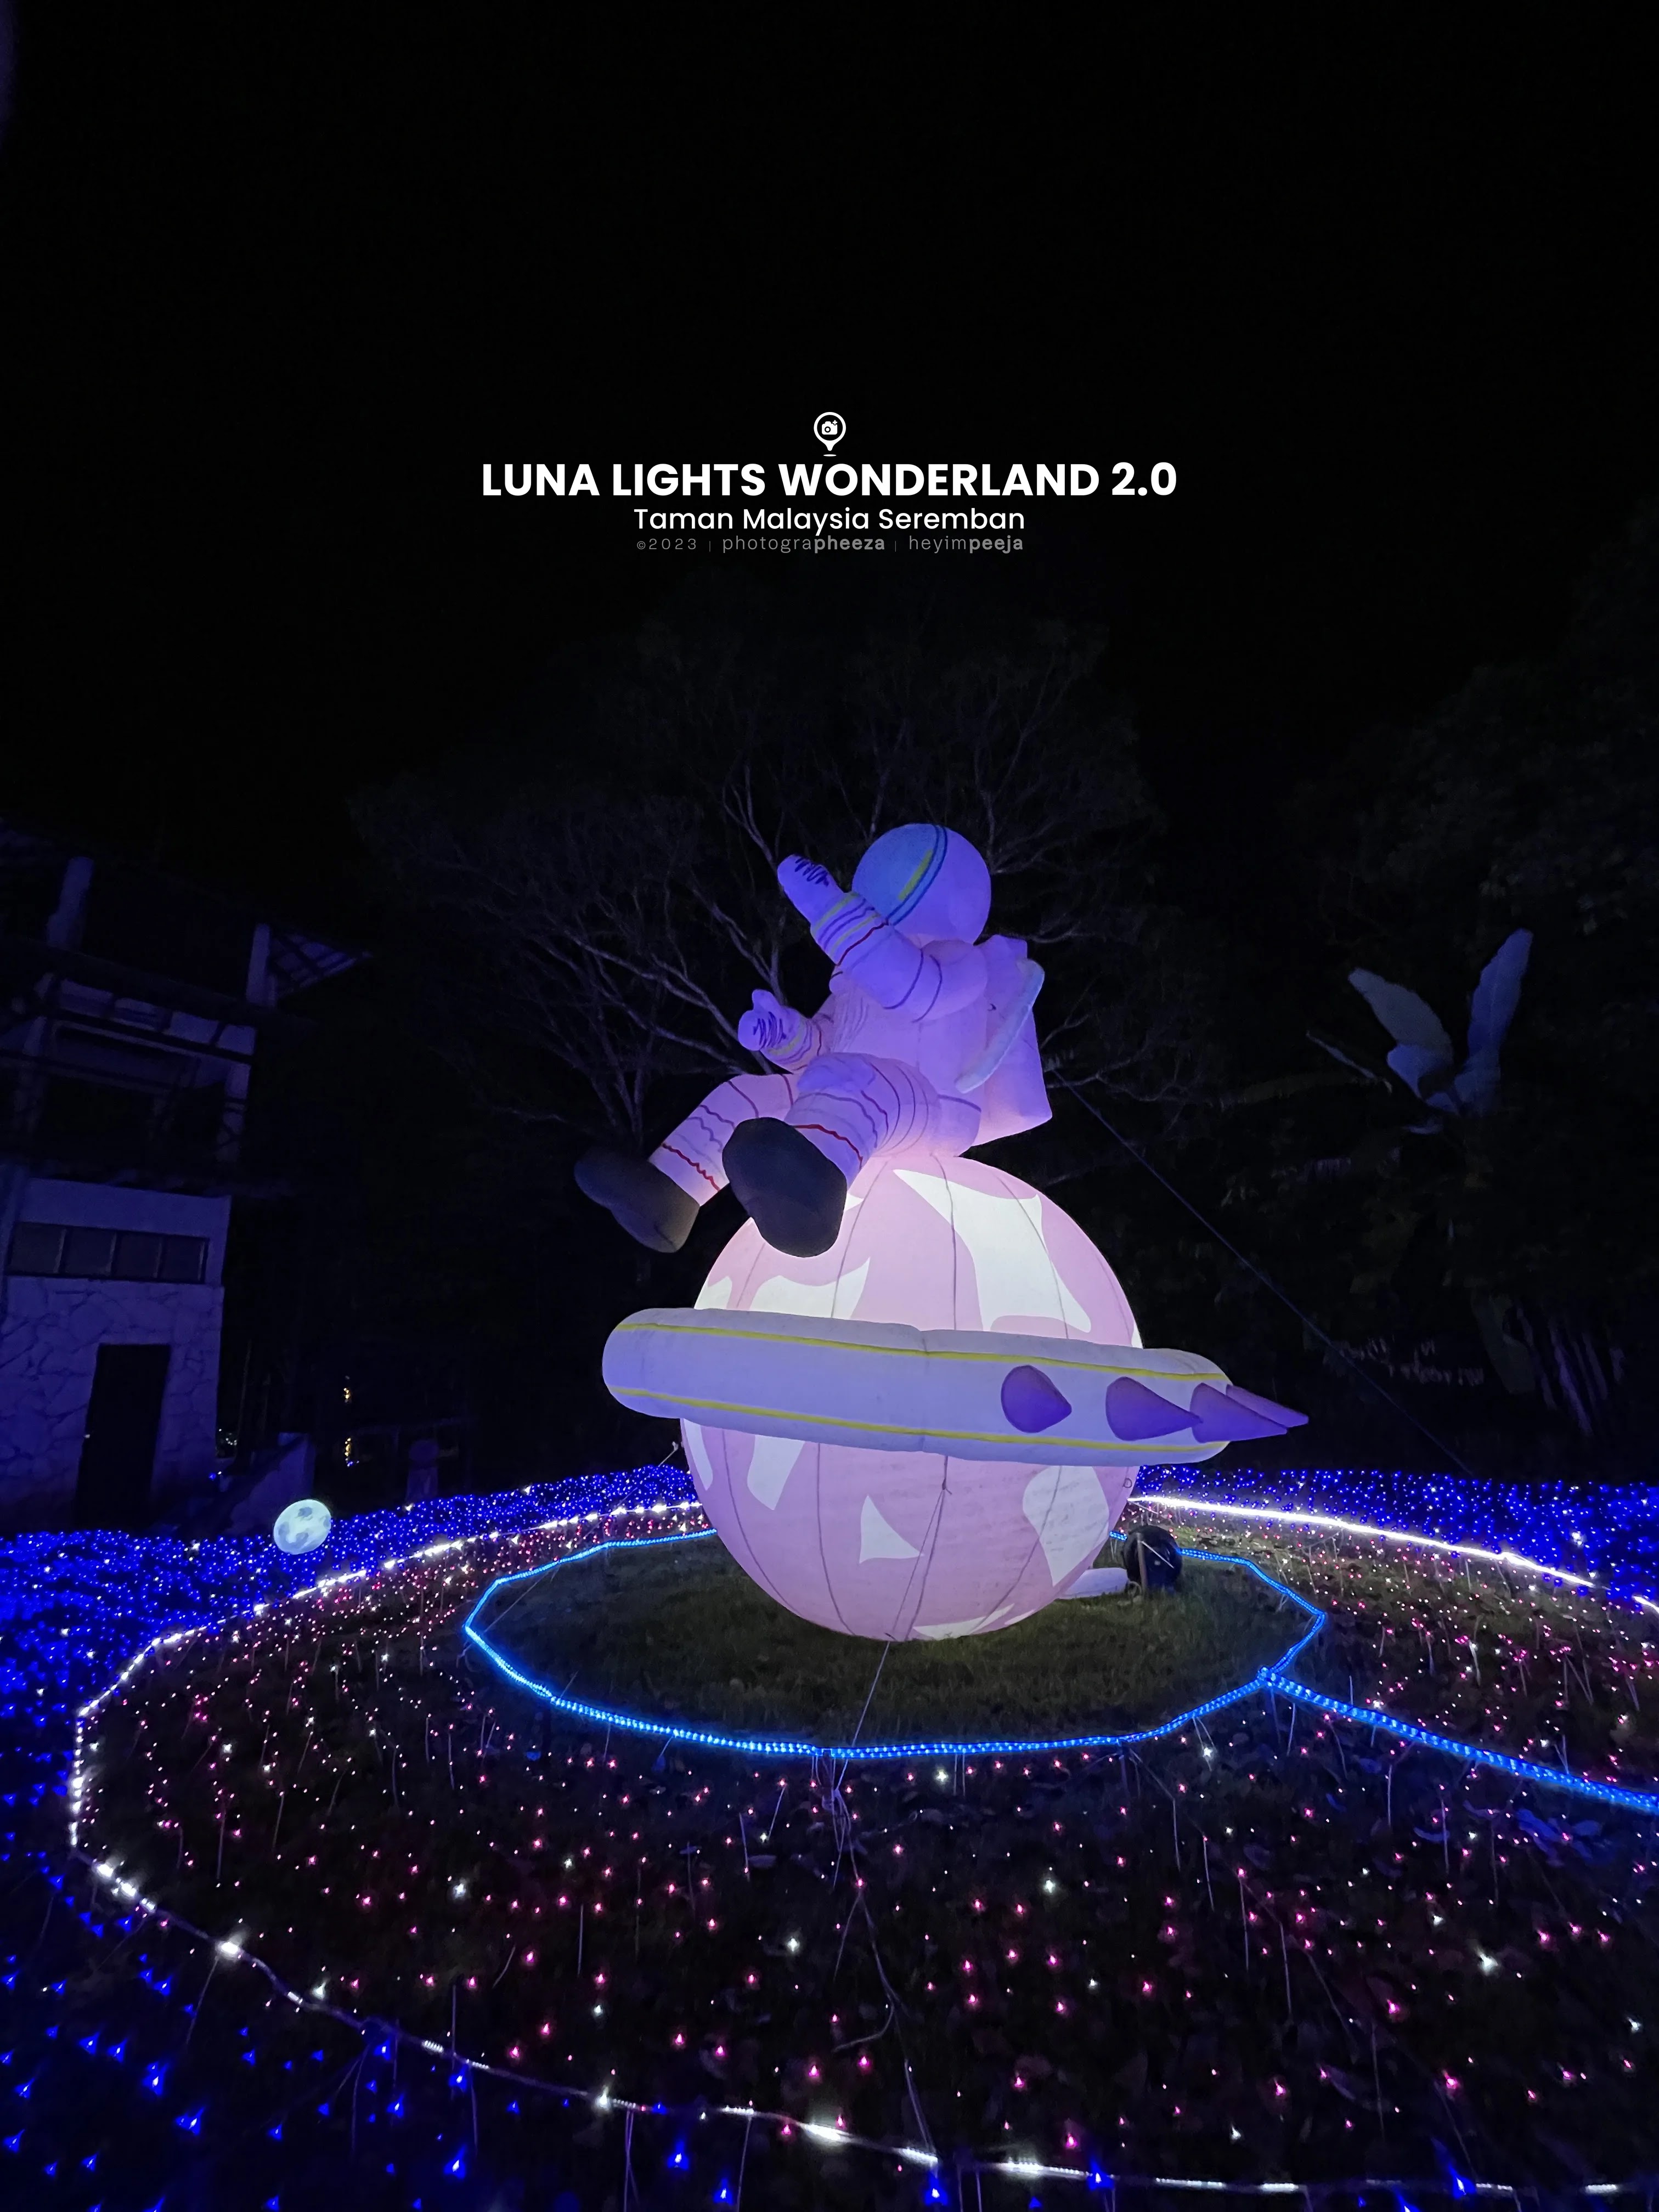 Luna Lights Wonderland 2.0 Taman Malaysia Seremban Meriah Dipenuhi LED Blinking